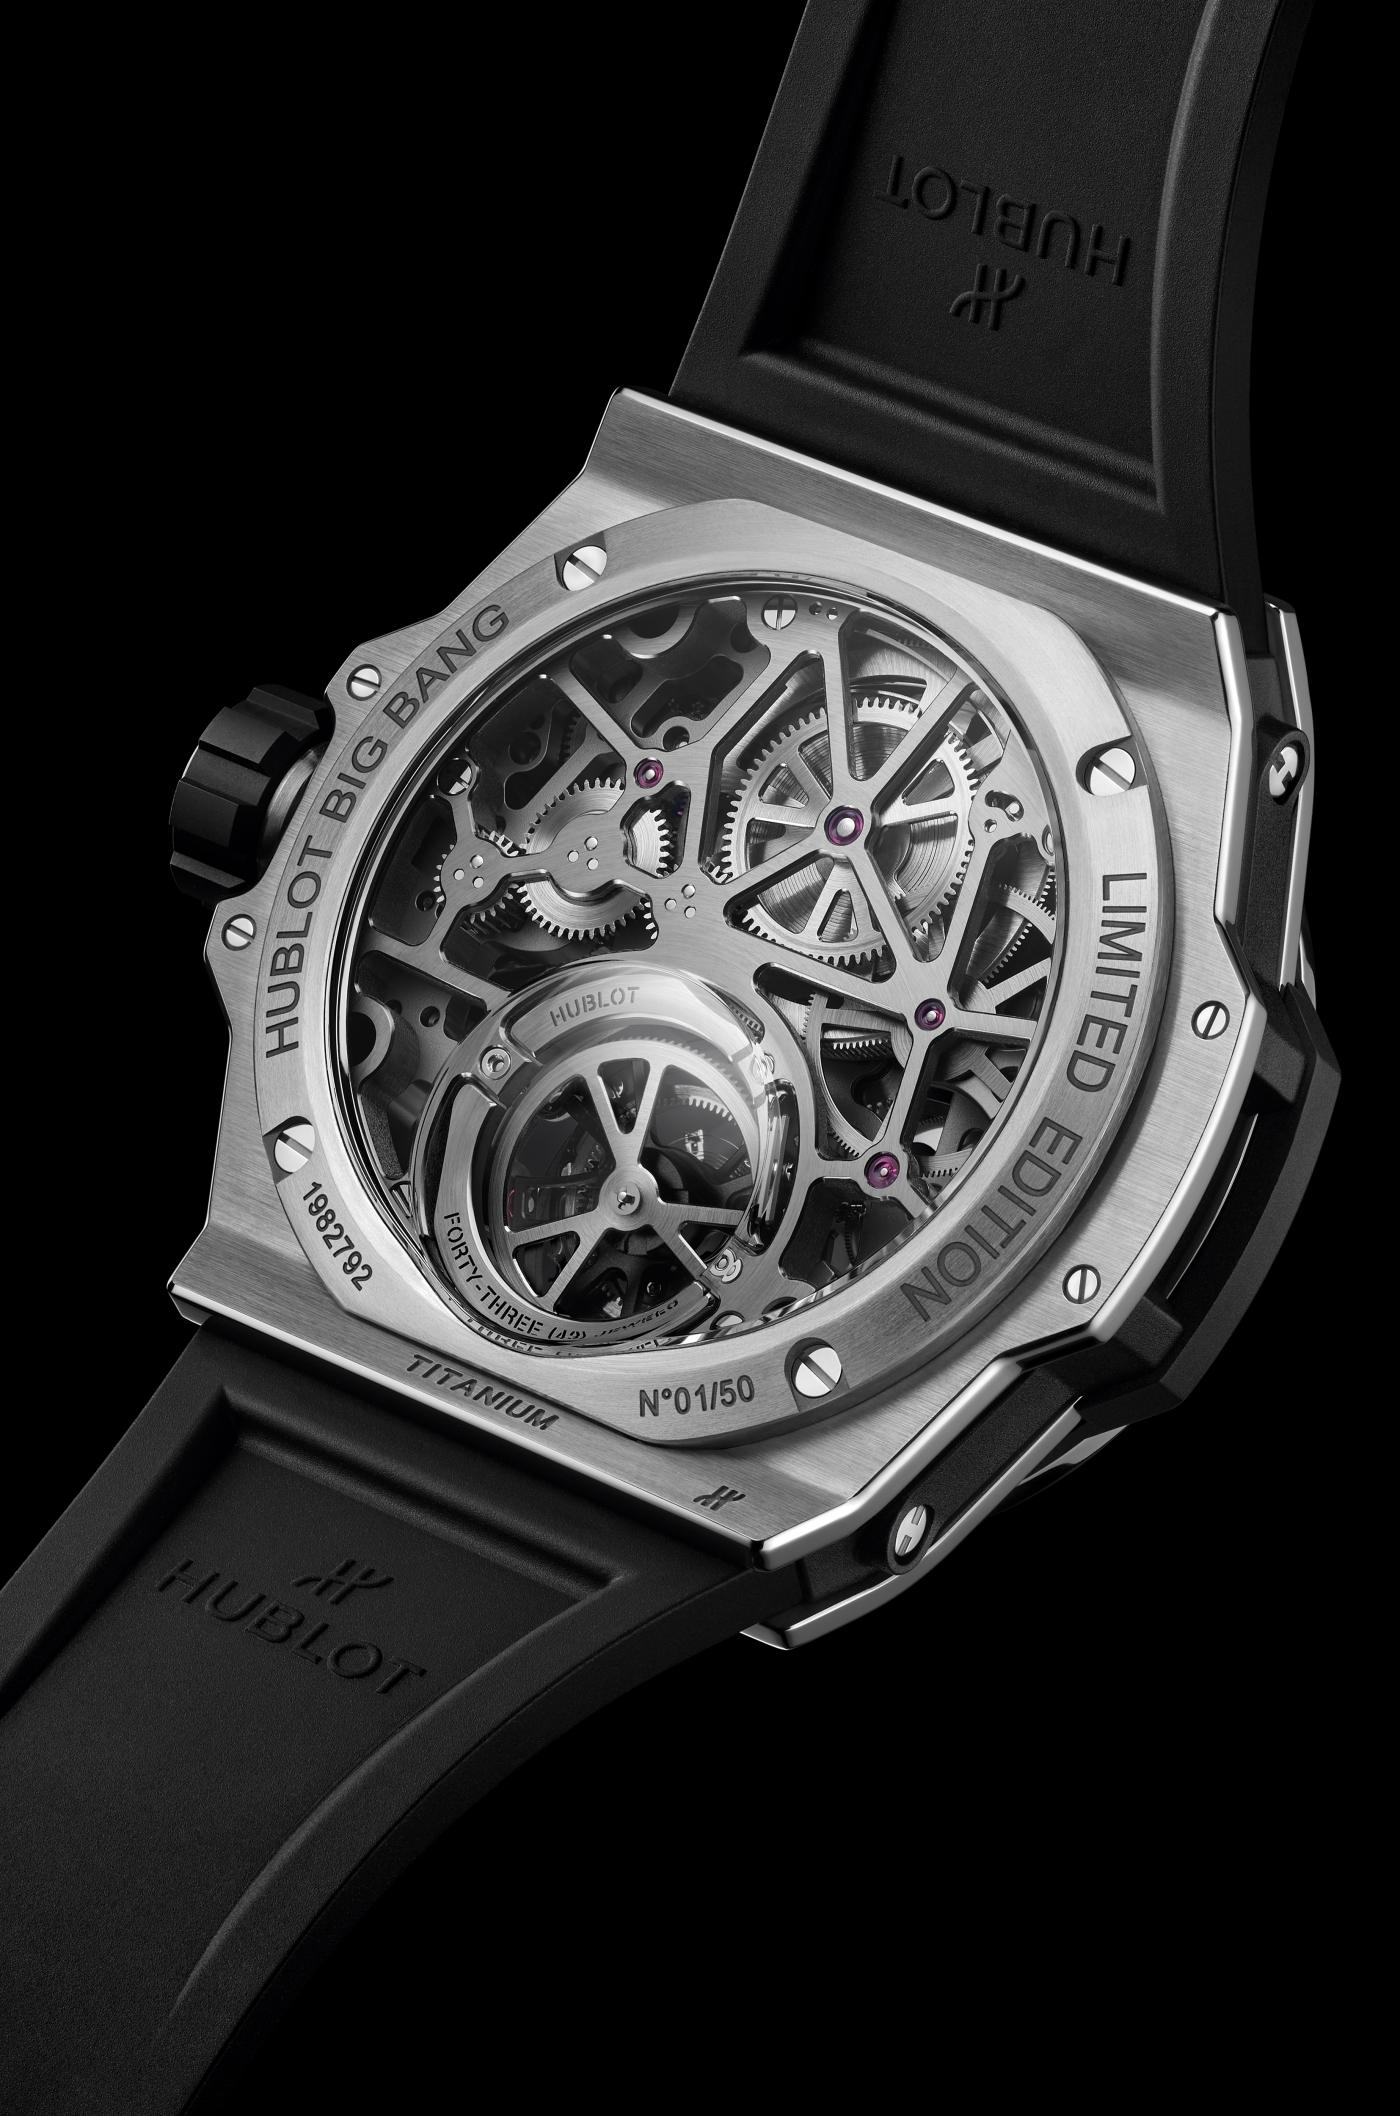 Hublot MP-13 Tourbillon Bi-Axis Retrograde watch